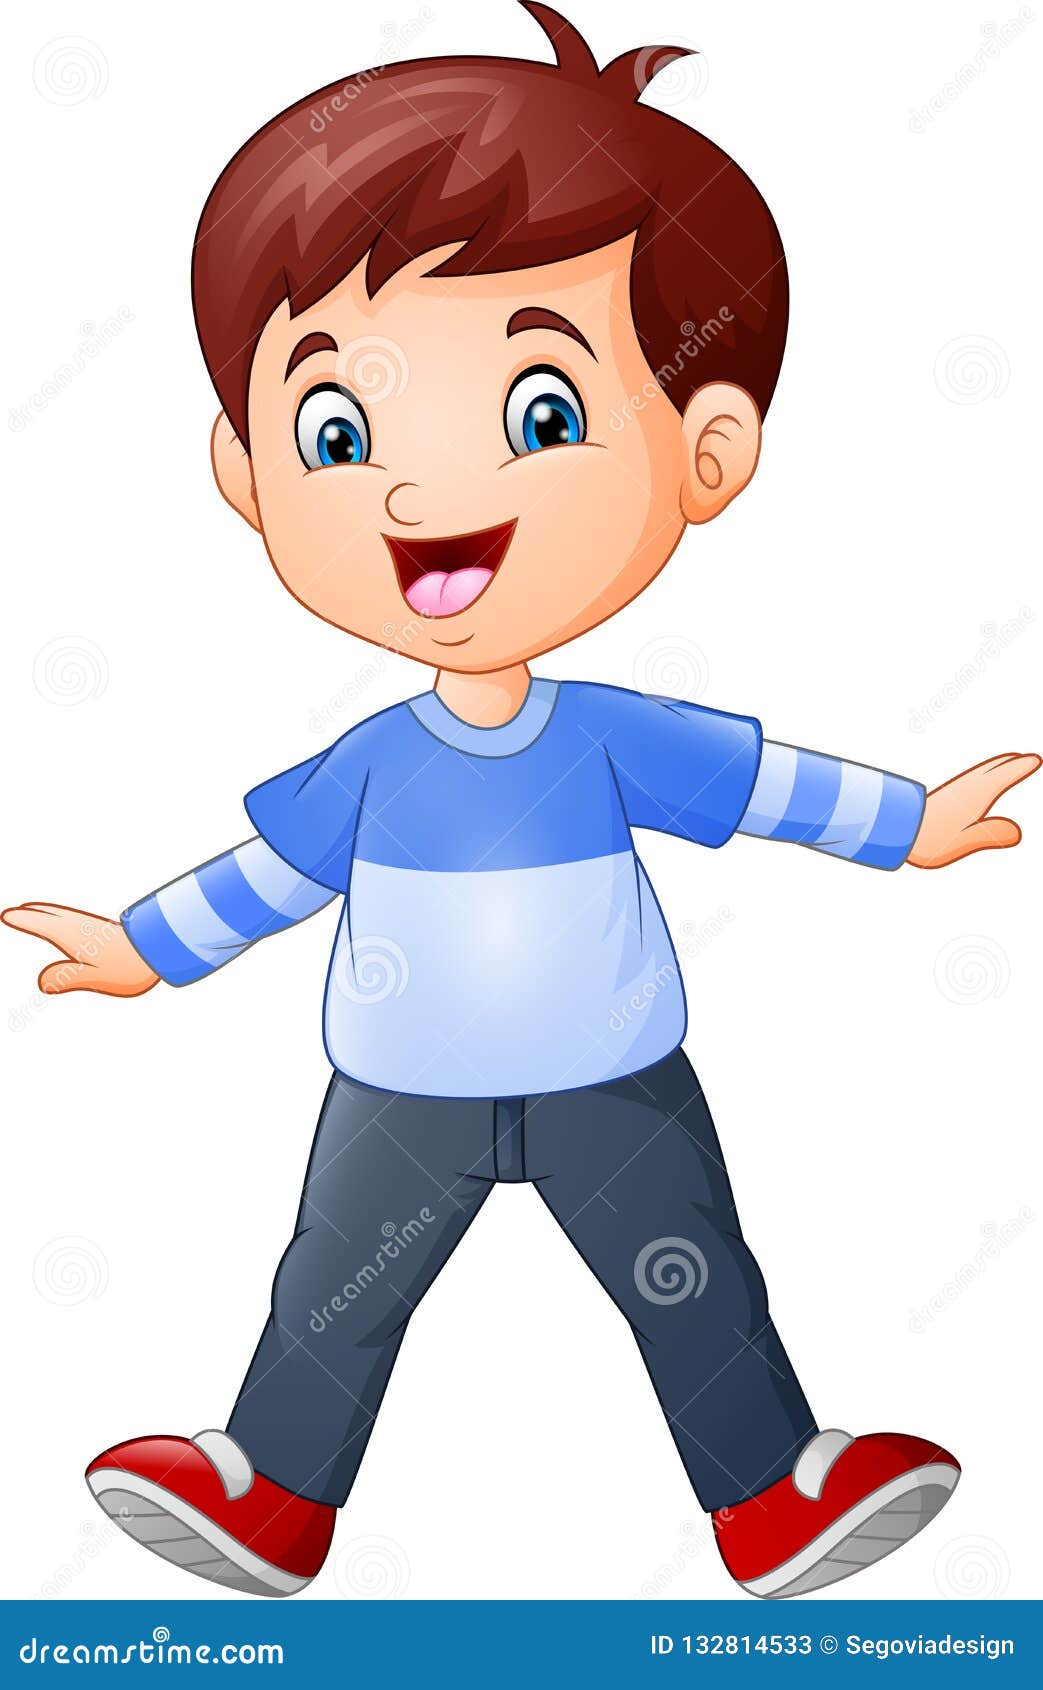 Happy boy cartoon stock vector. Illustration of elementary - 132814533